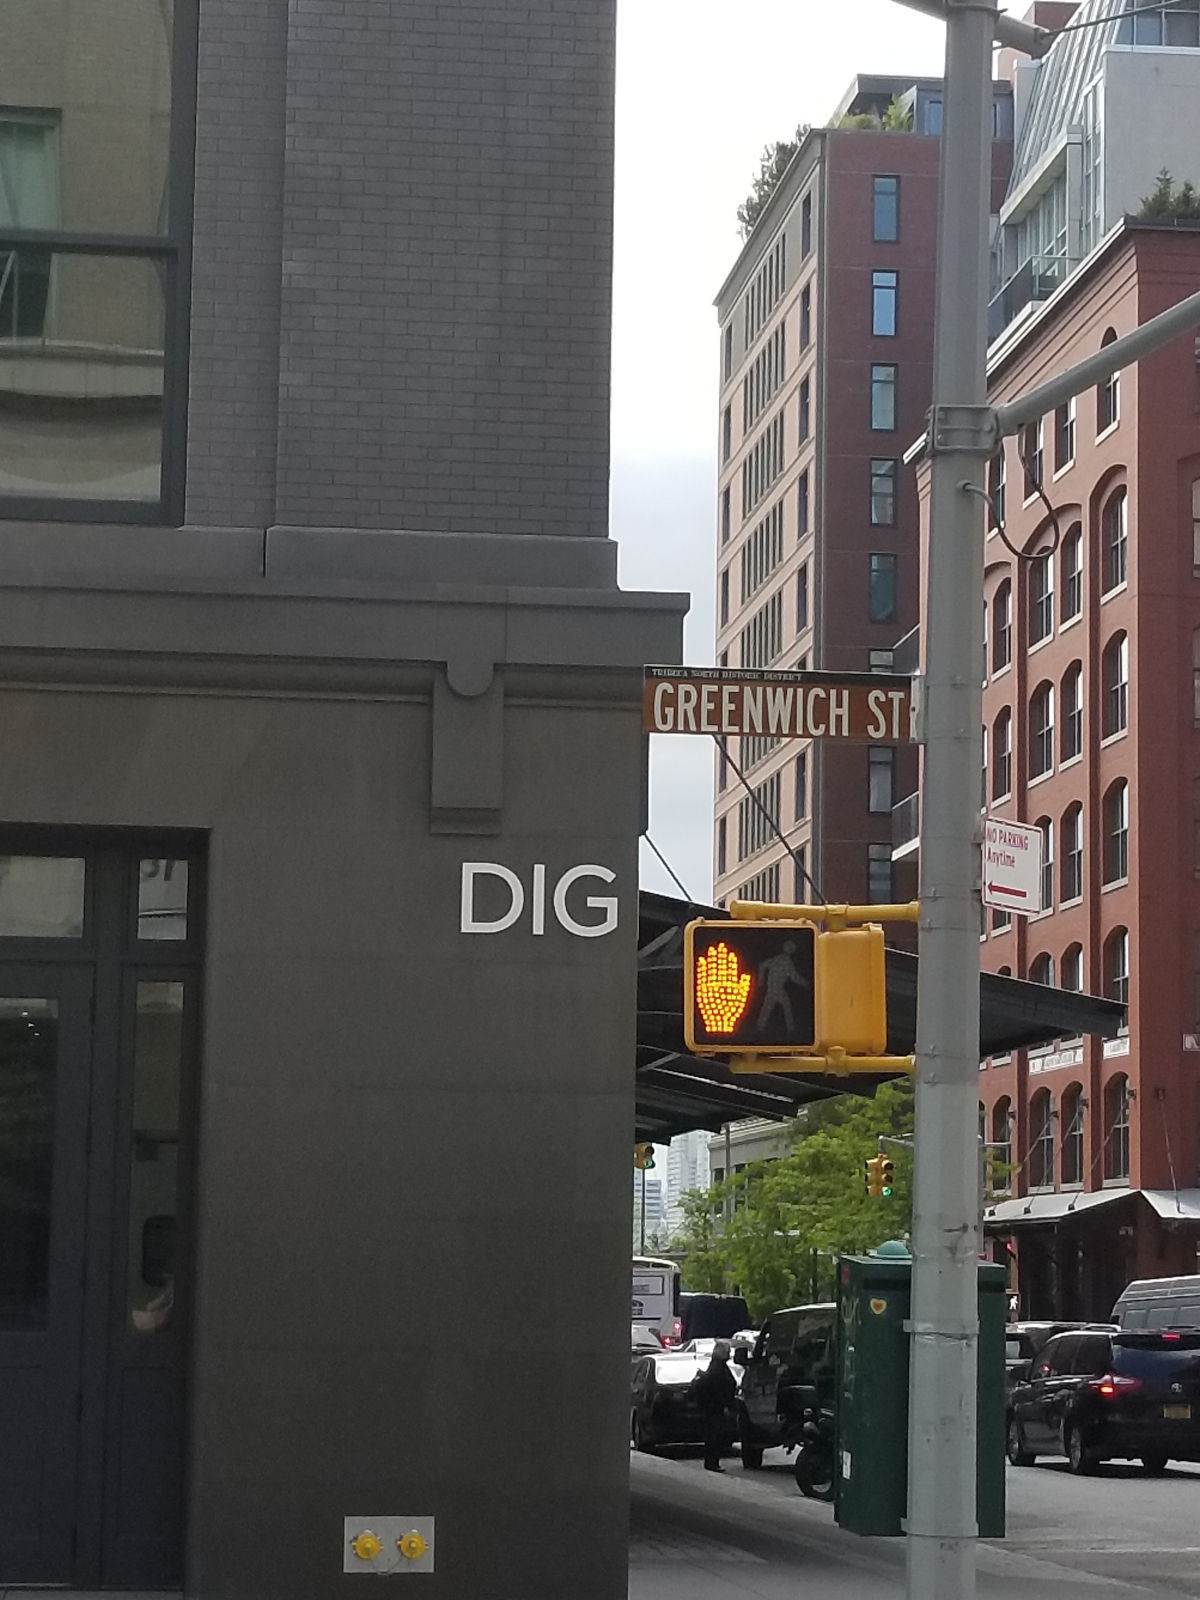 'dig' on greenwich street